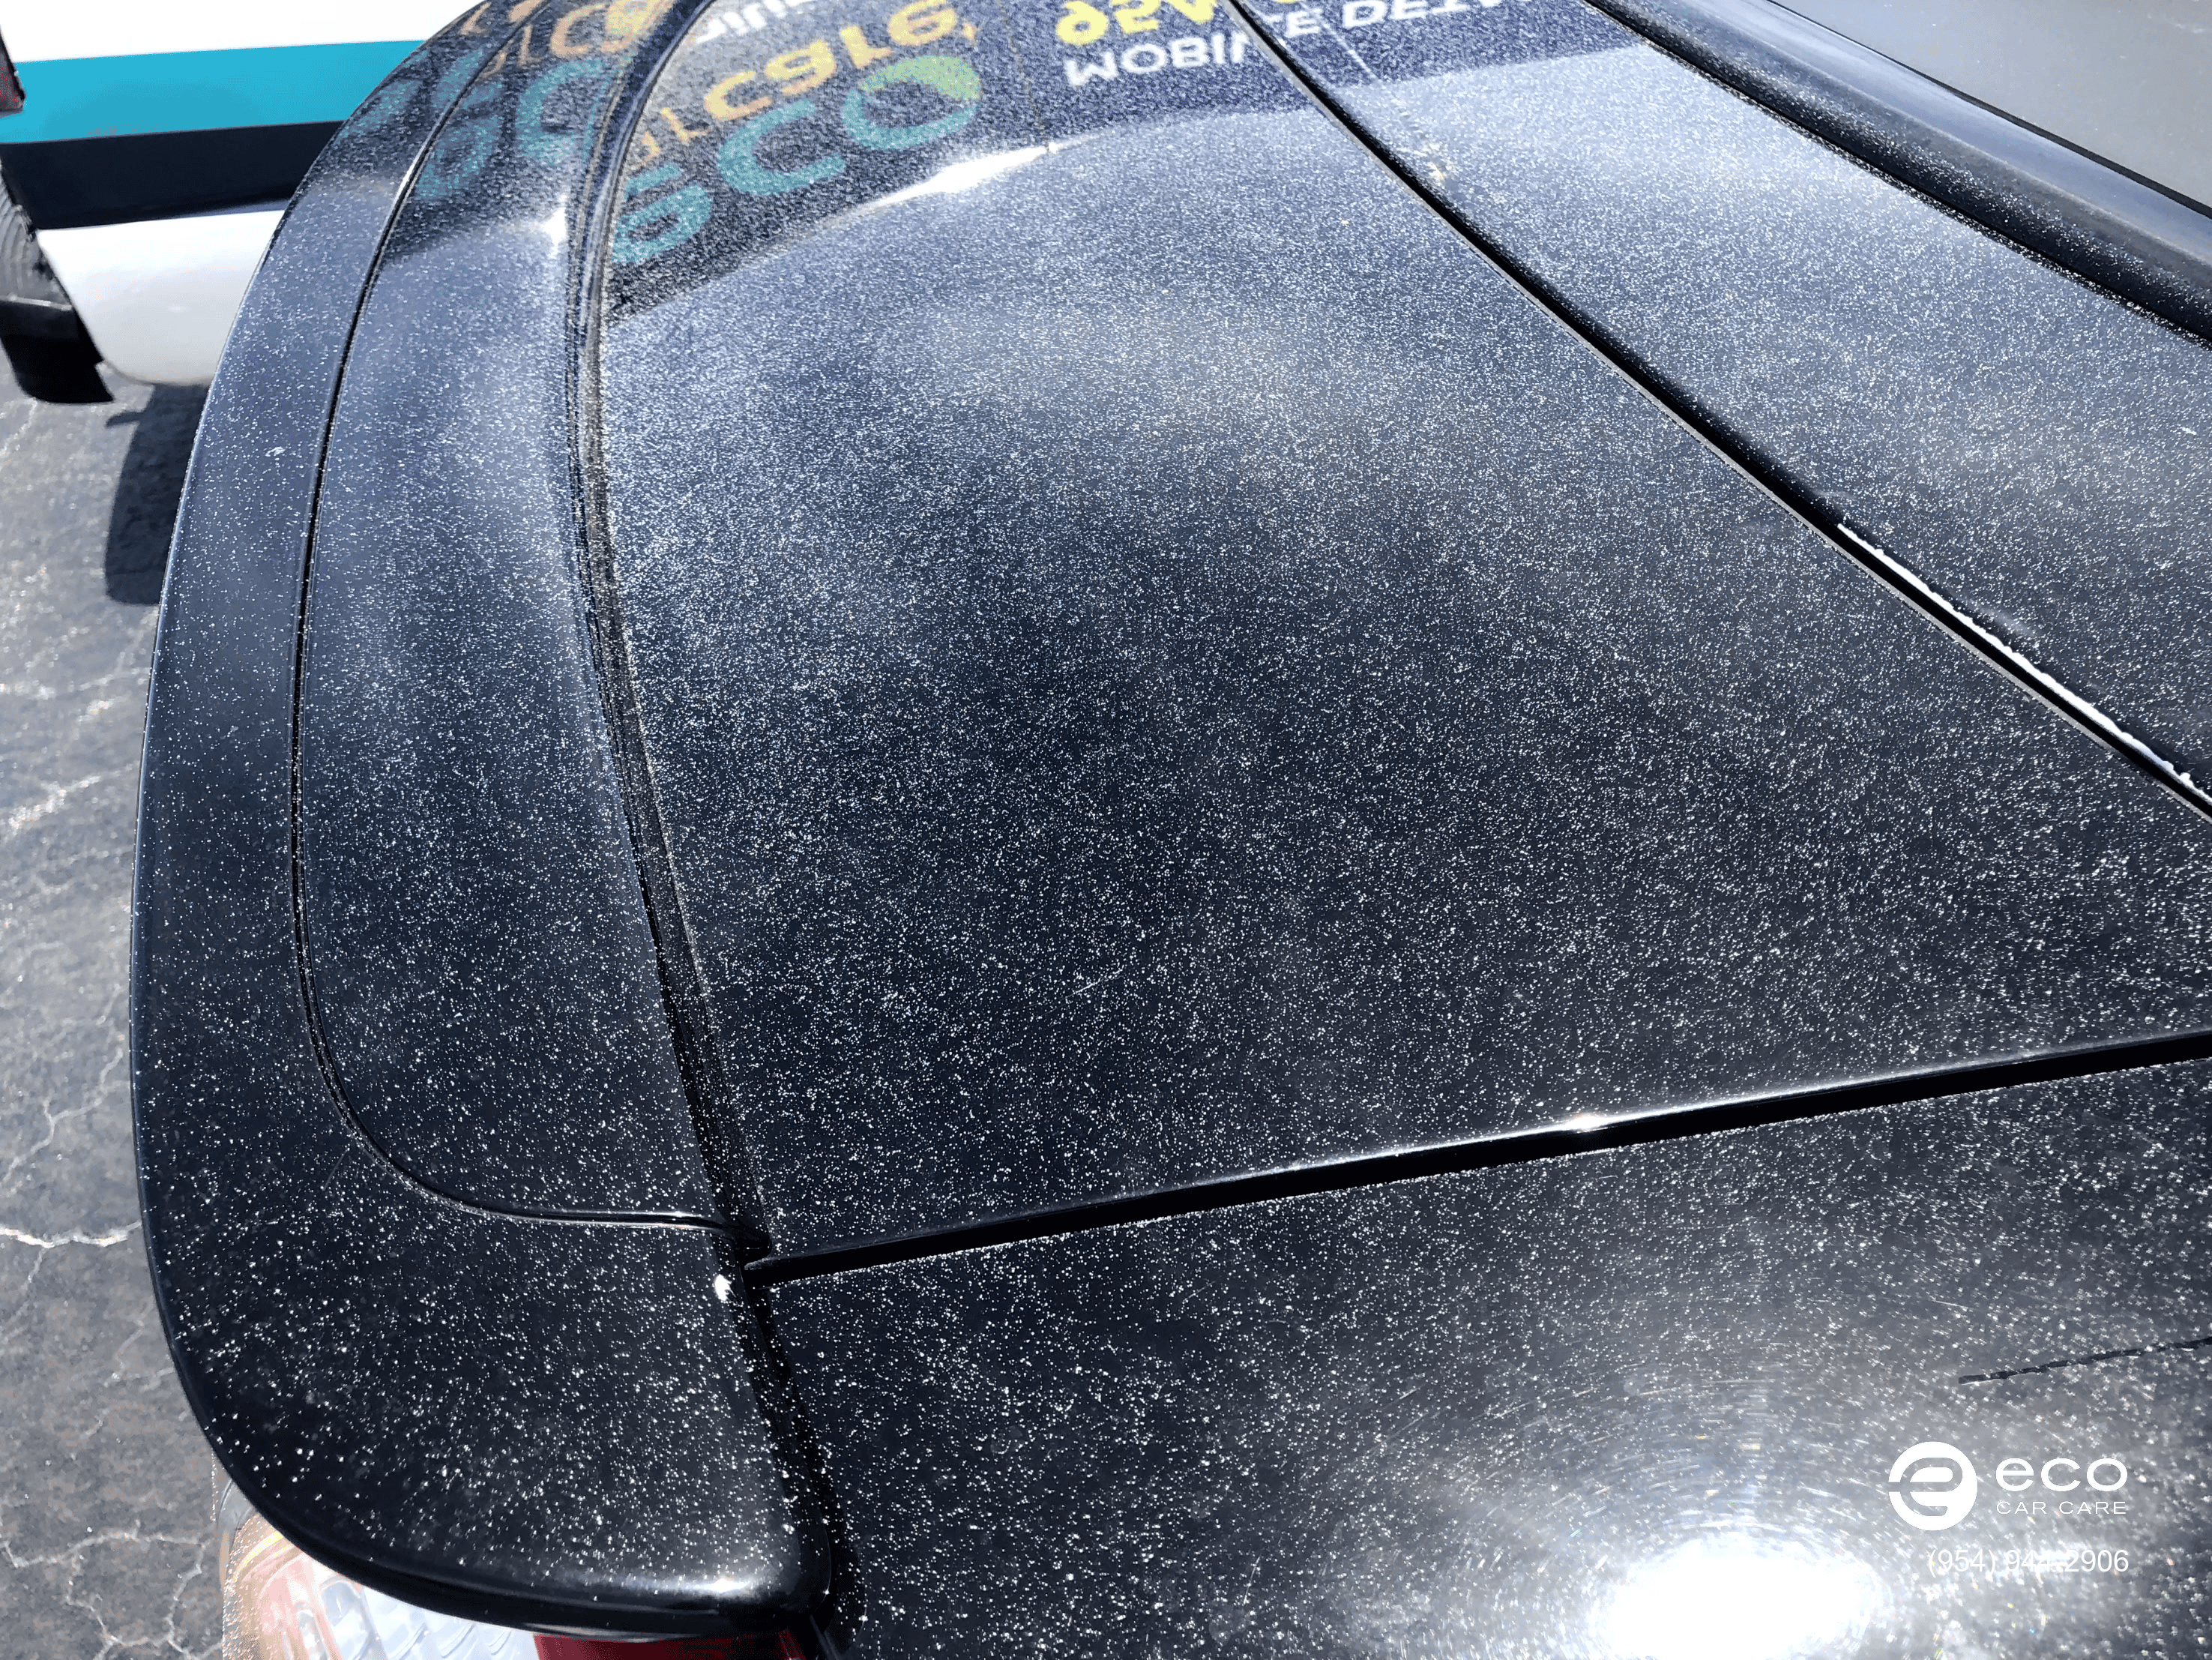 remove concrete from car paint